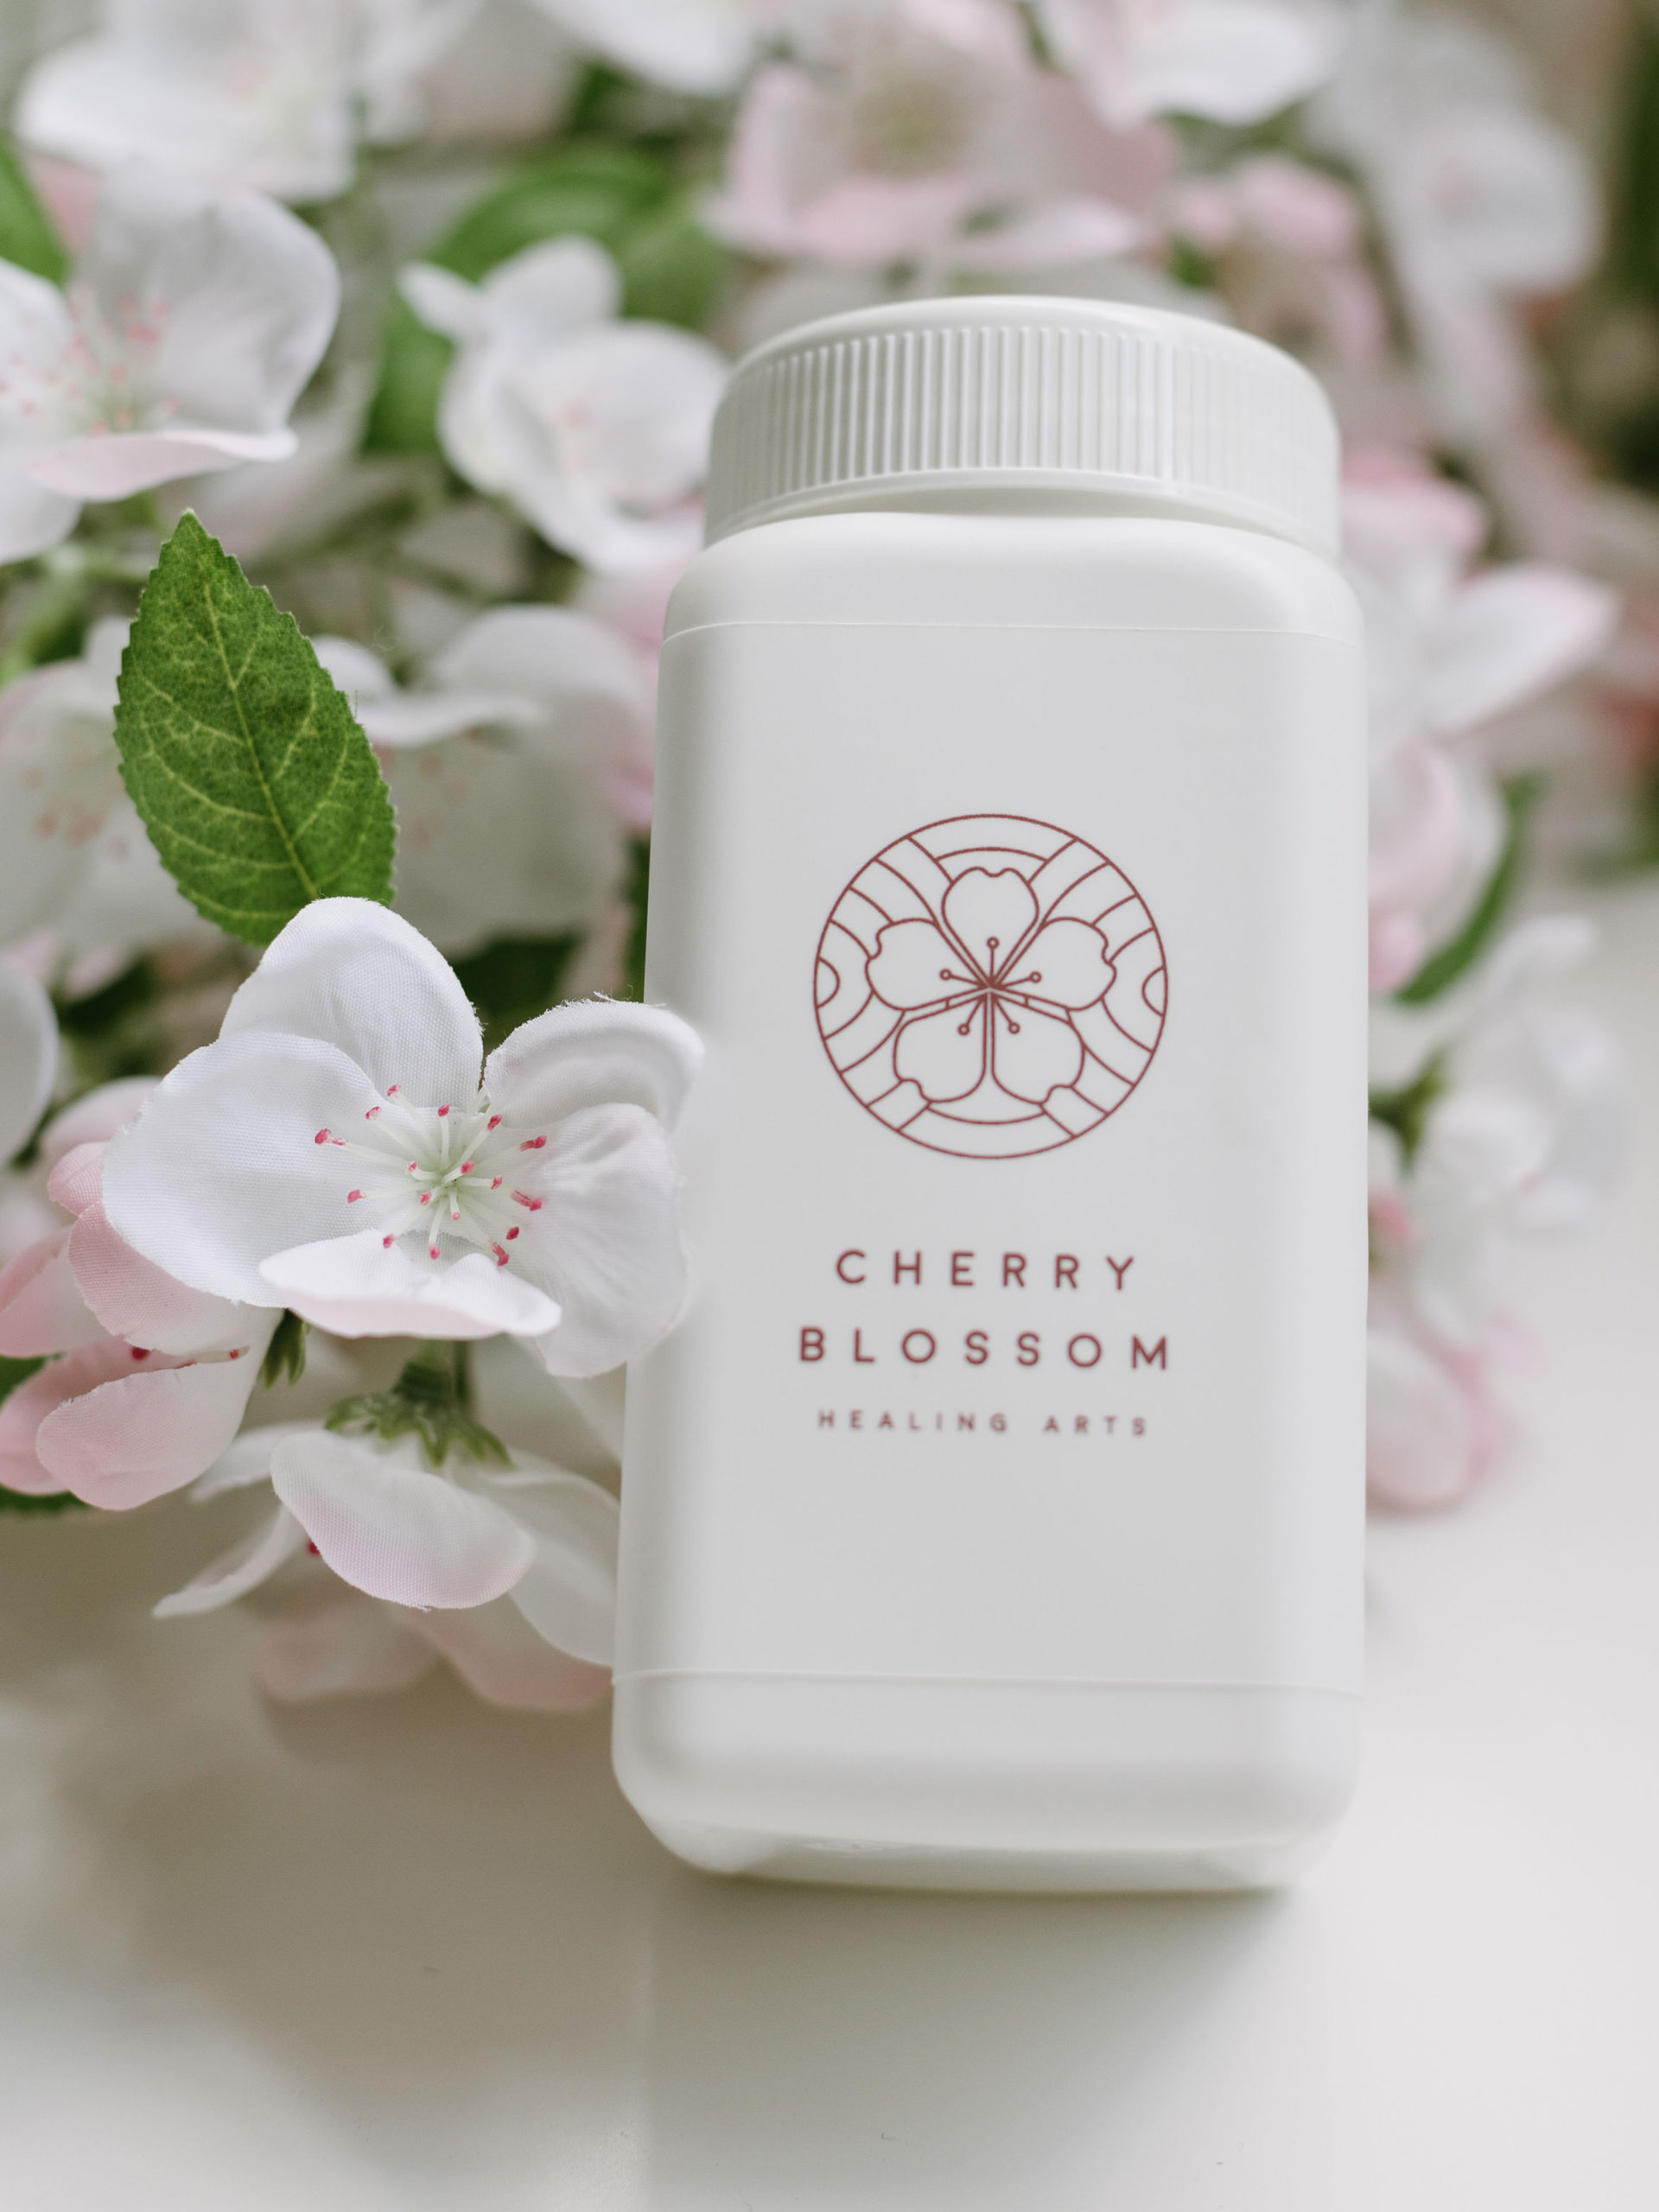 Cherry Blossom Healing Arts Herbal Medicine bottles